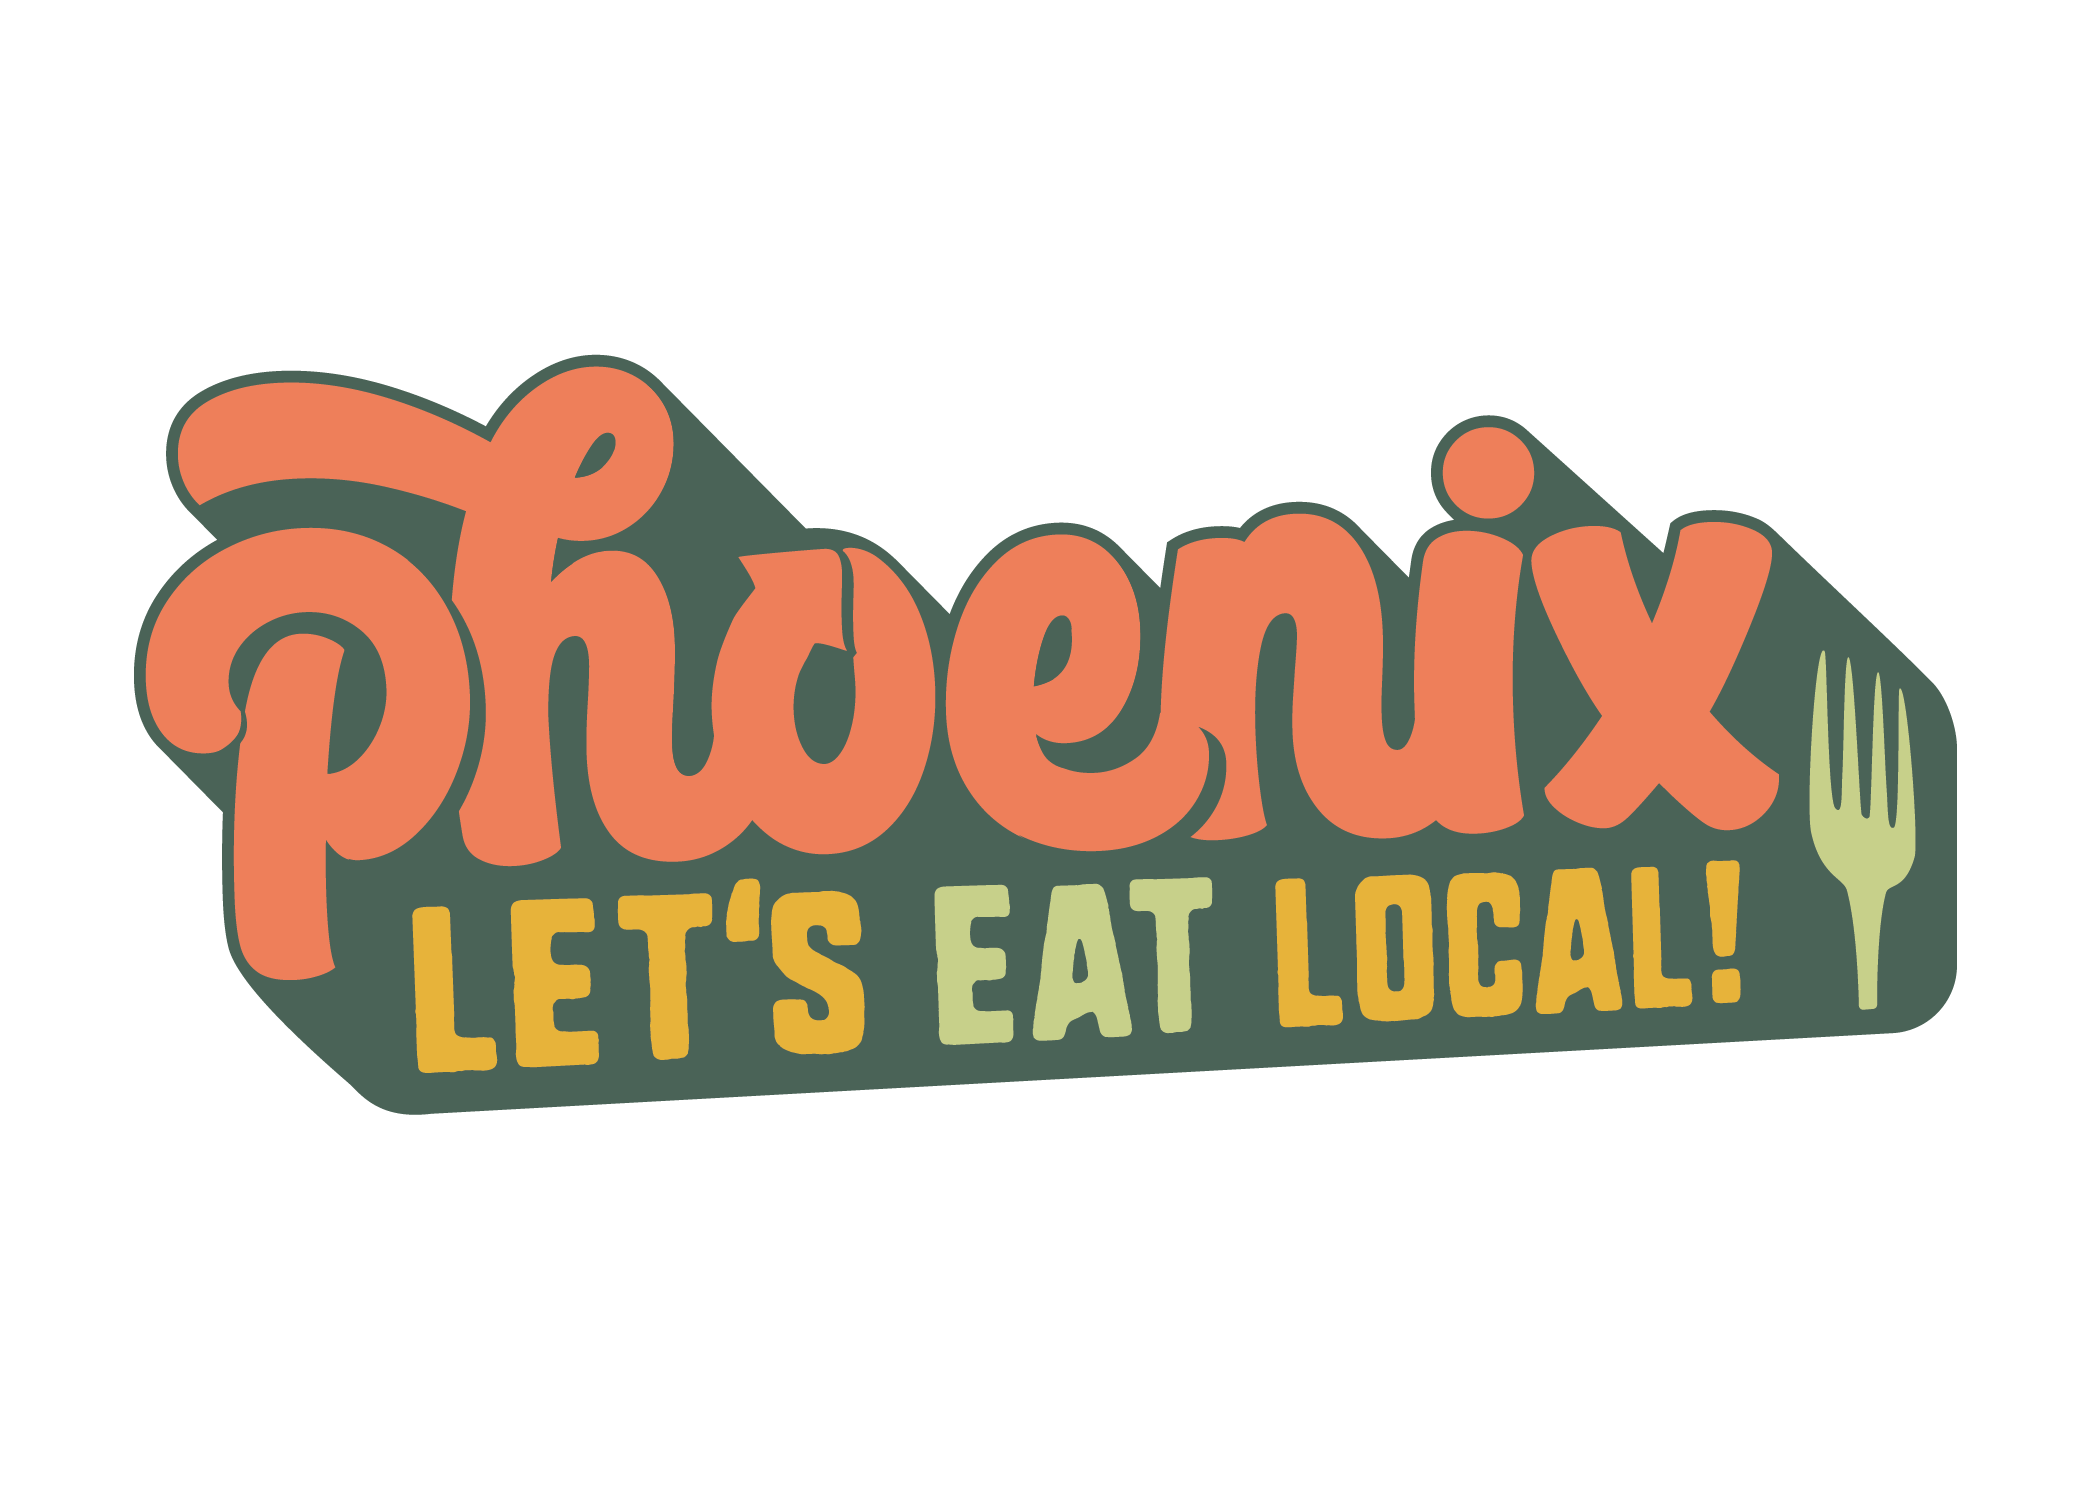 Phoenix Let's Eat Local!